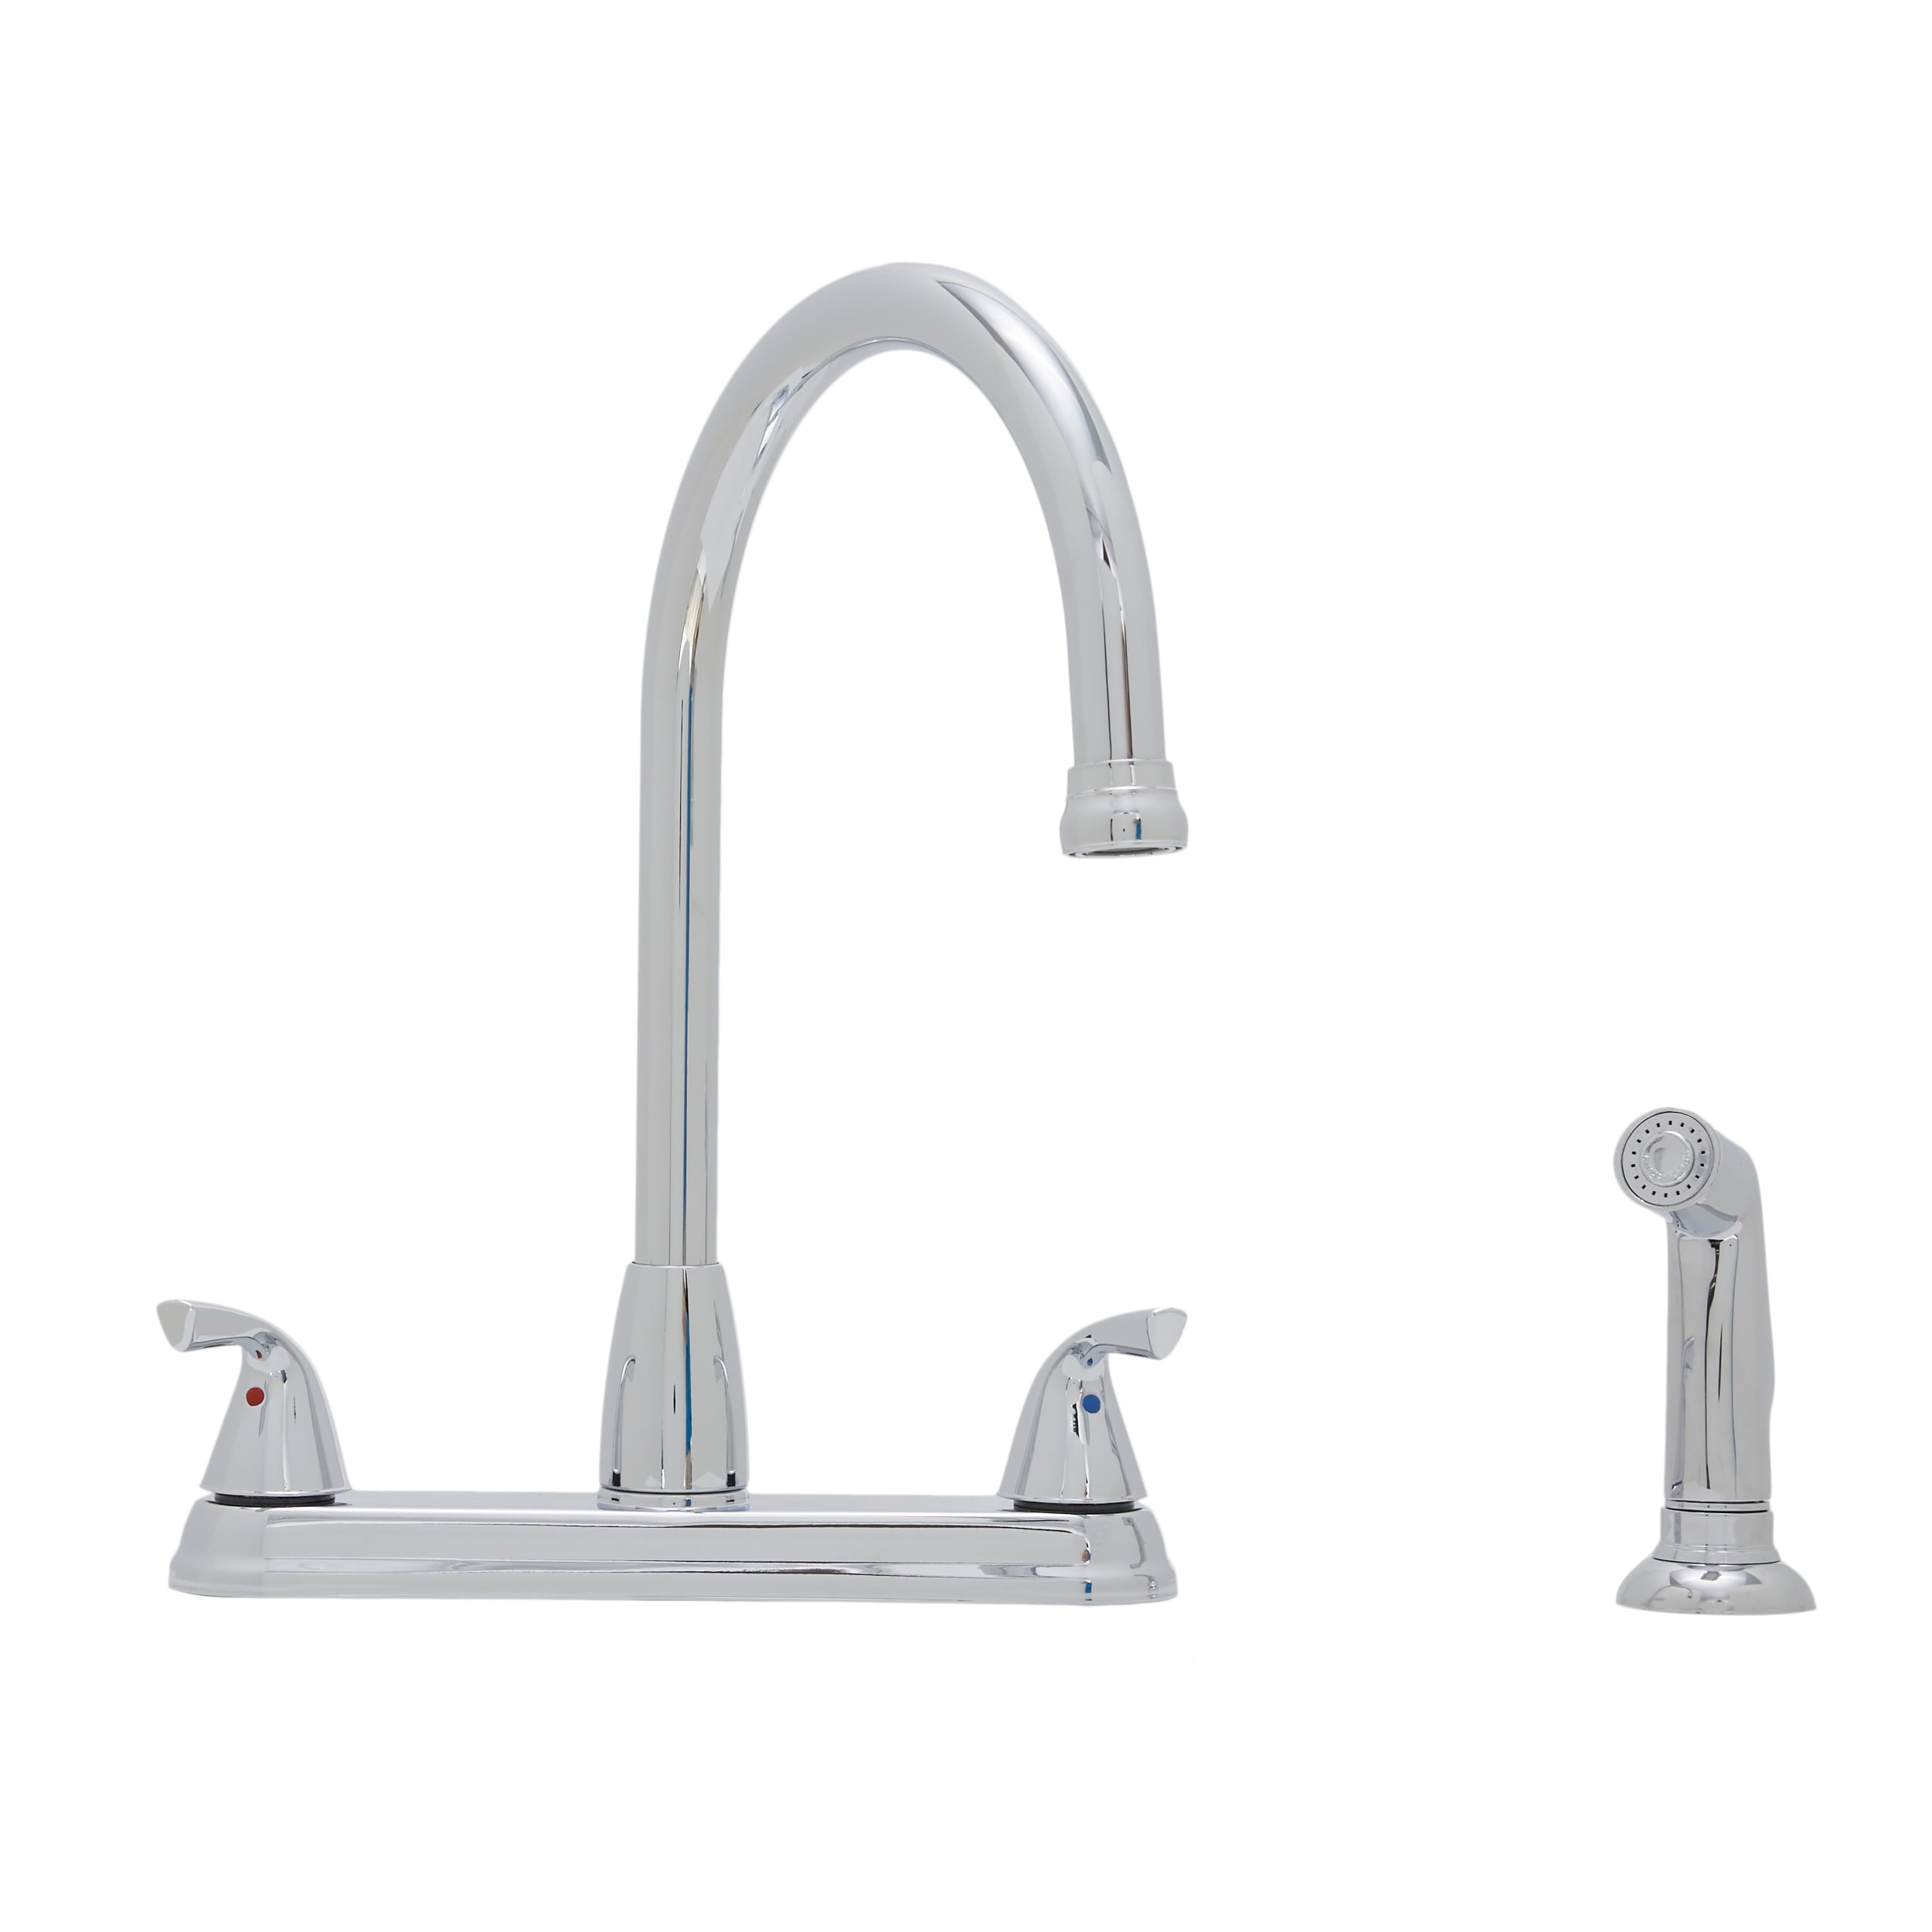 Swivel Spout Kitchen Faucet Polished Chrome 2-Handle Home Sink Water Tap Faucet 